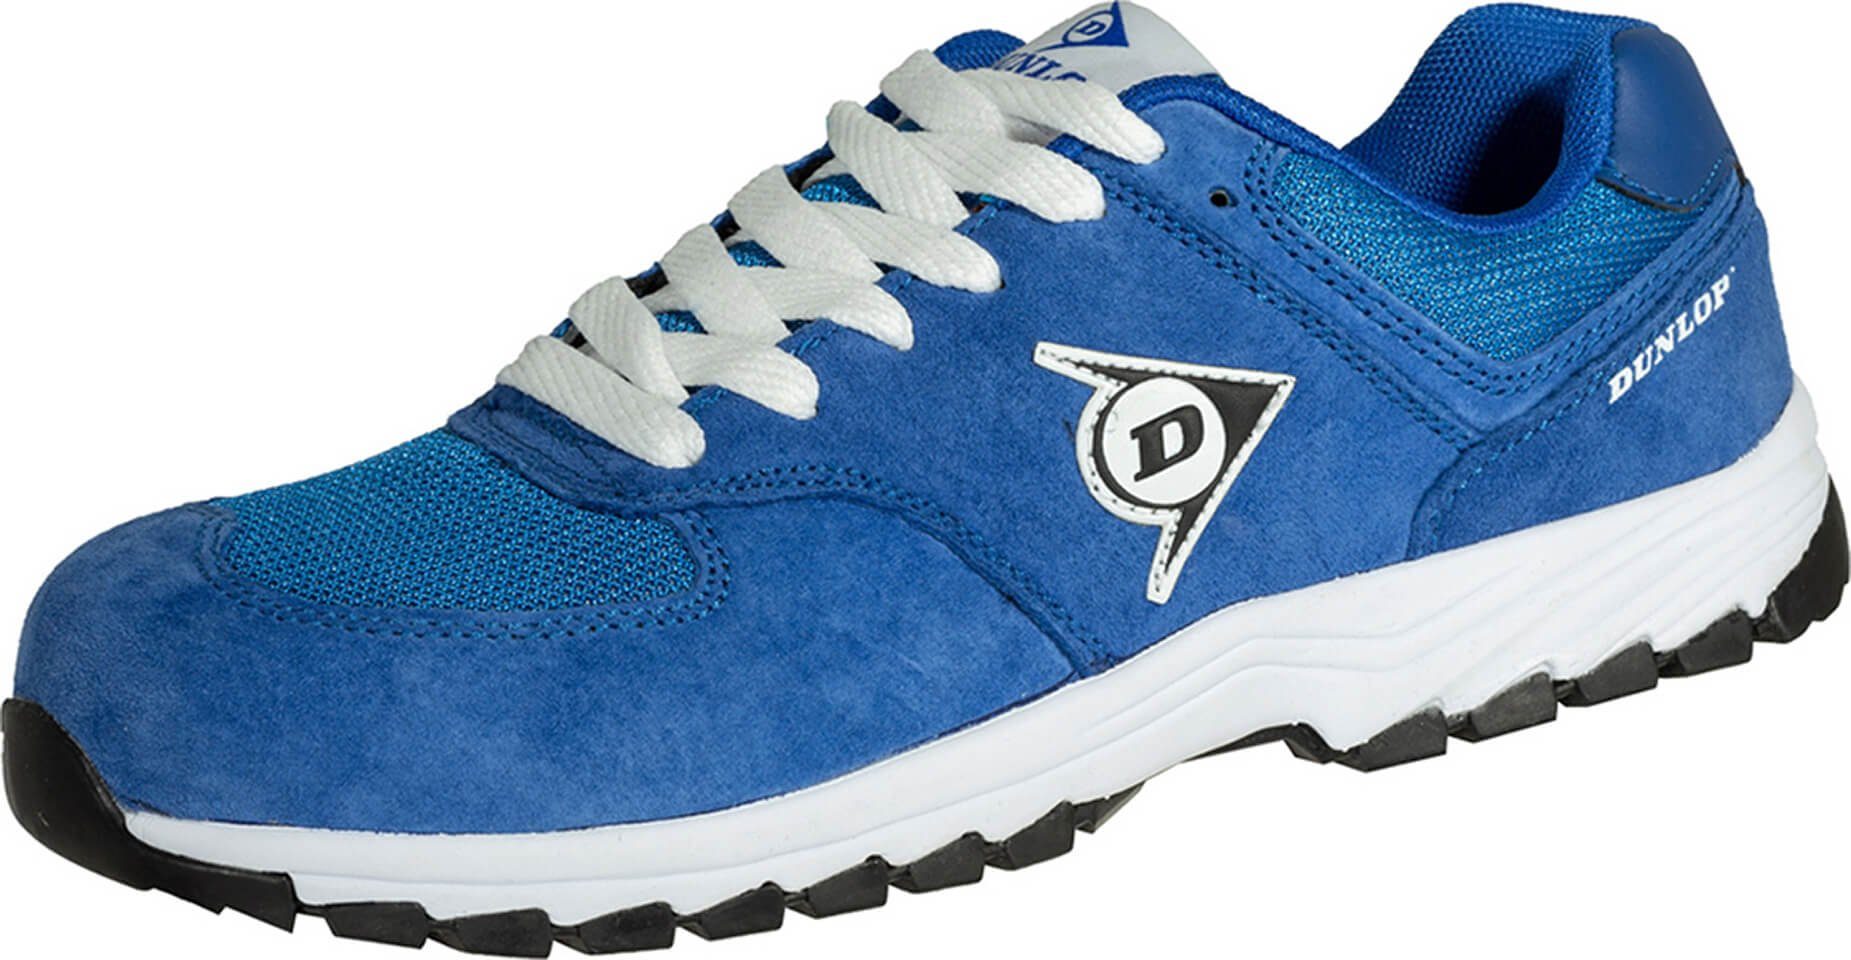 Dunlop_Workwear Flying Arrow blau S3 Sicherheitsschuh